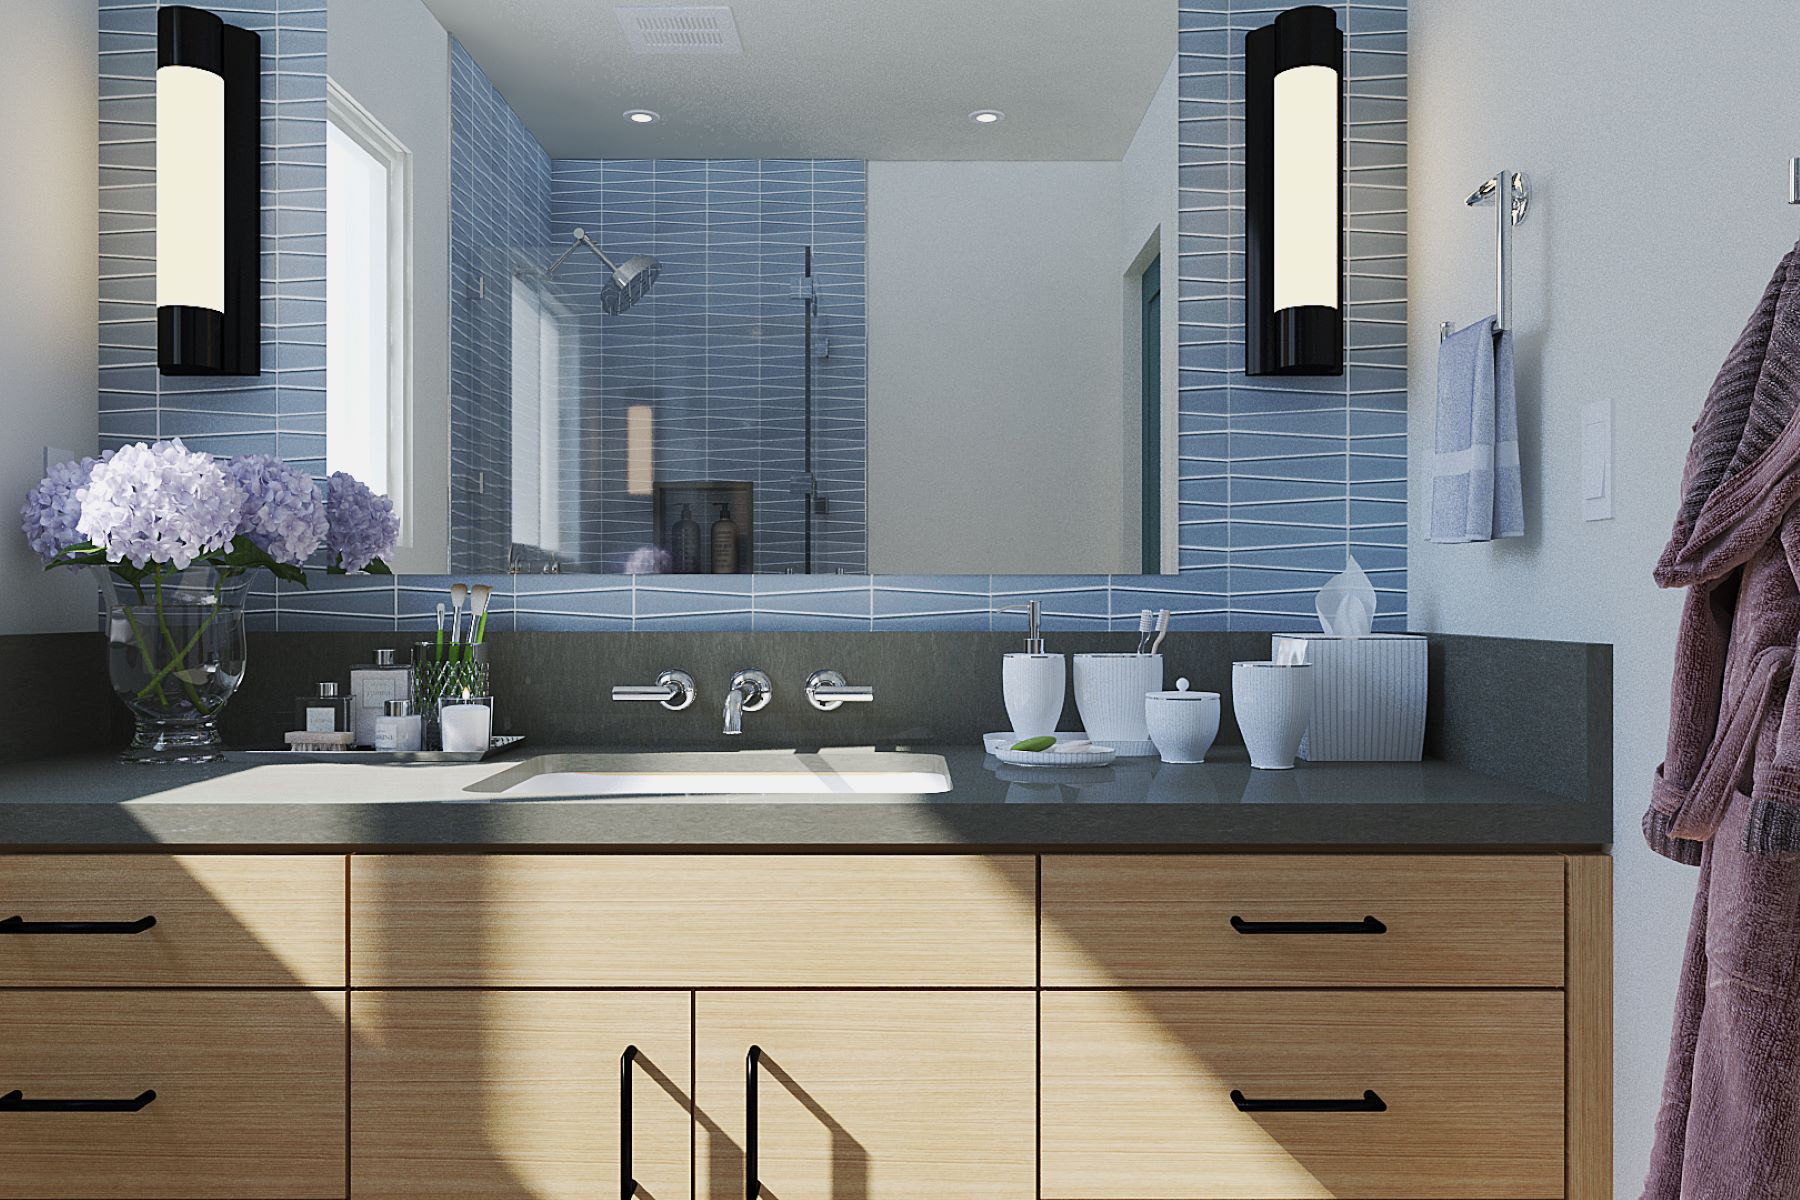 Bathroom remodel in Danville, CA by East Bay interior designer Yoko Oda